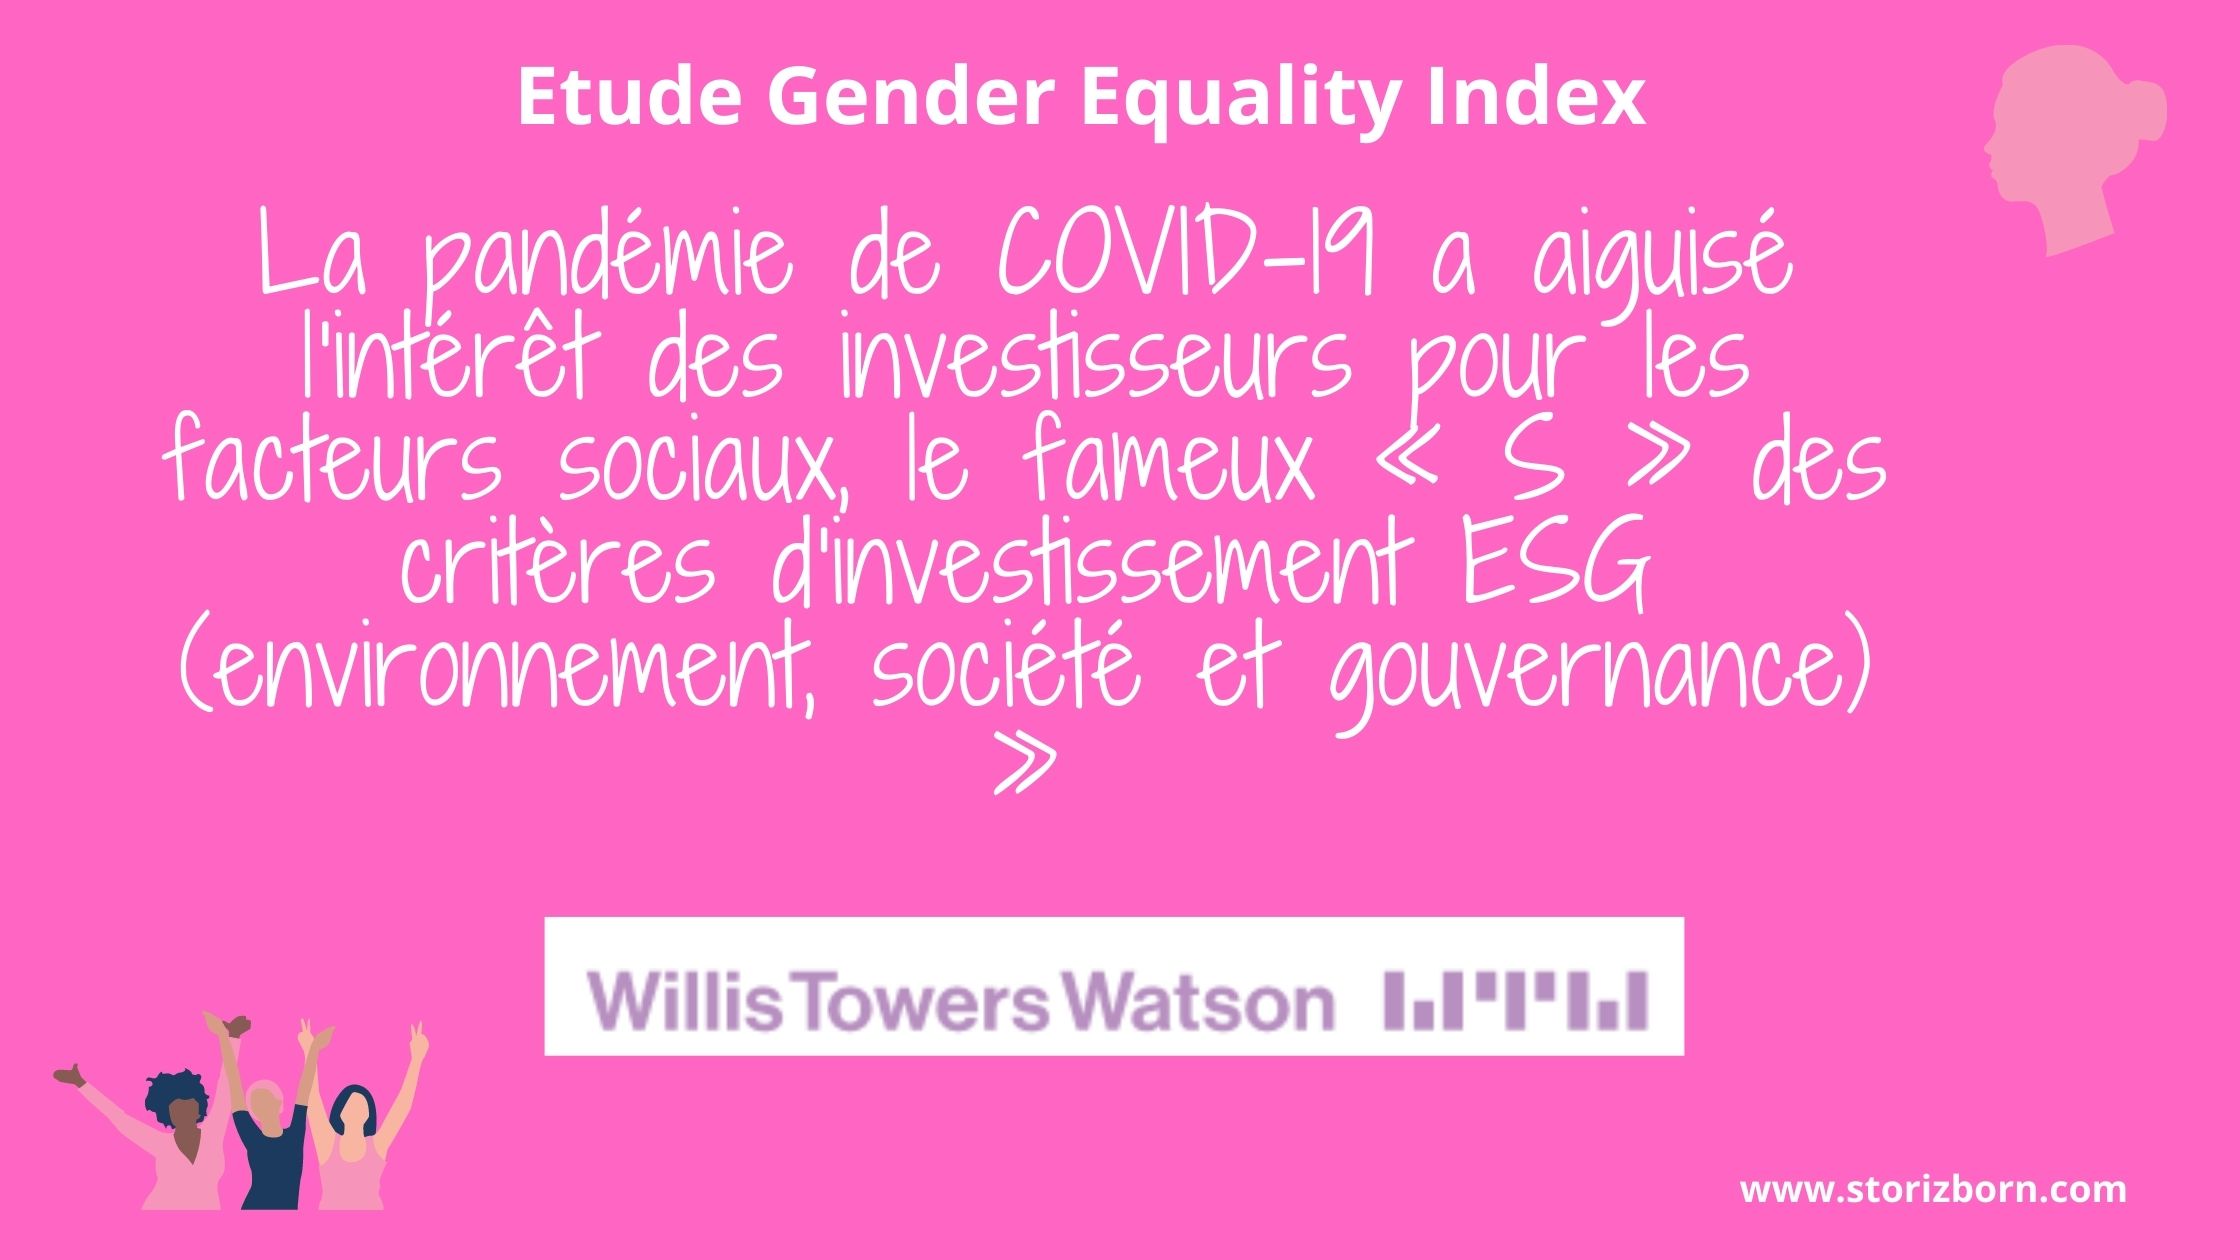 étude Gender Equality Index par Willis Towers Watson - 2